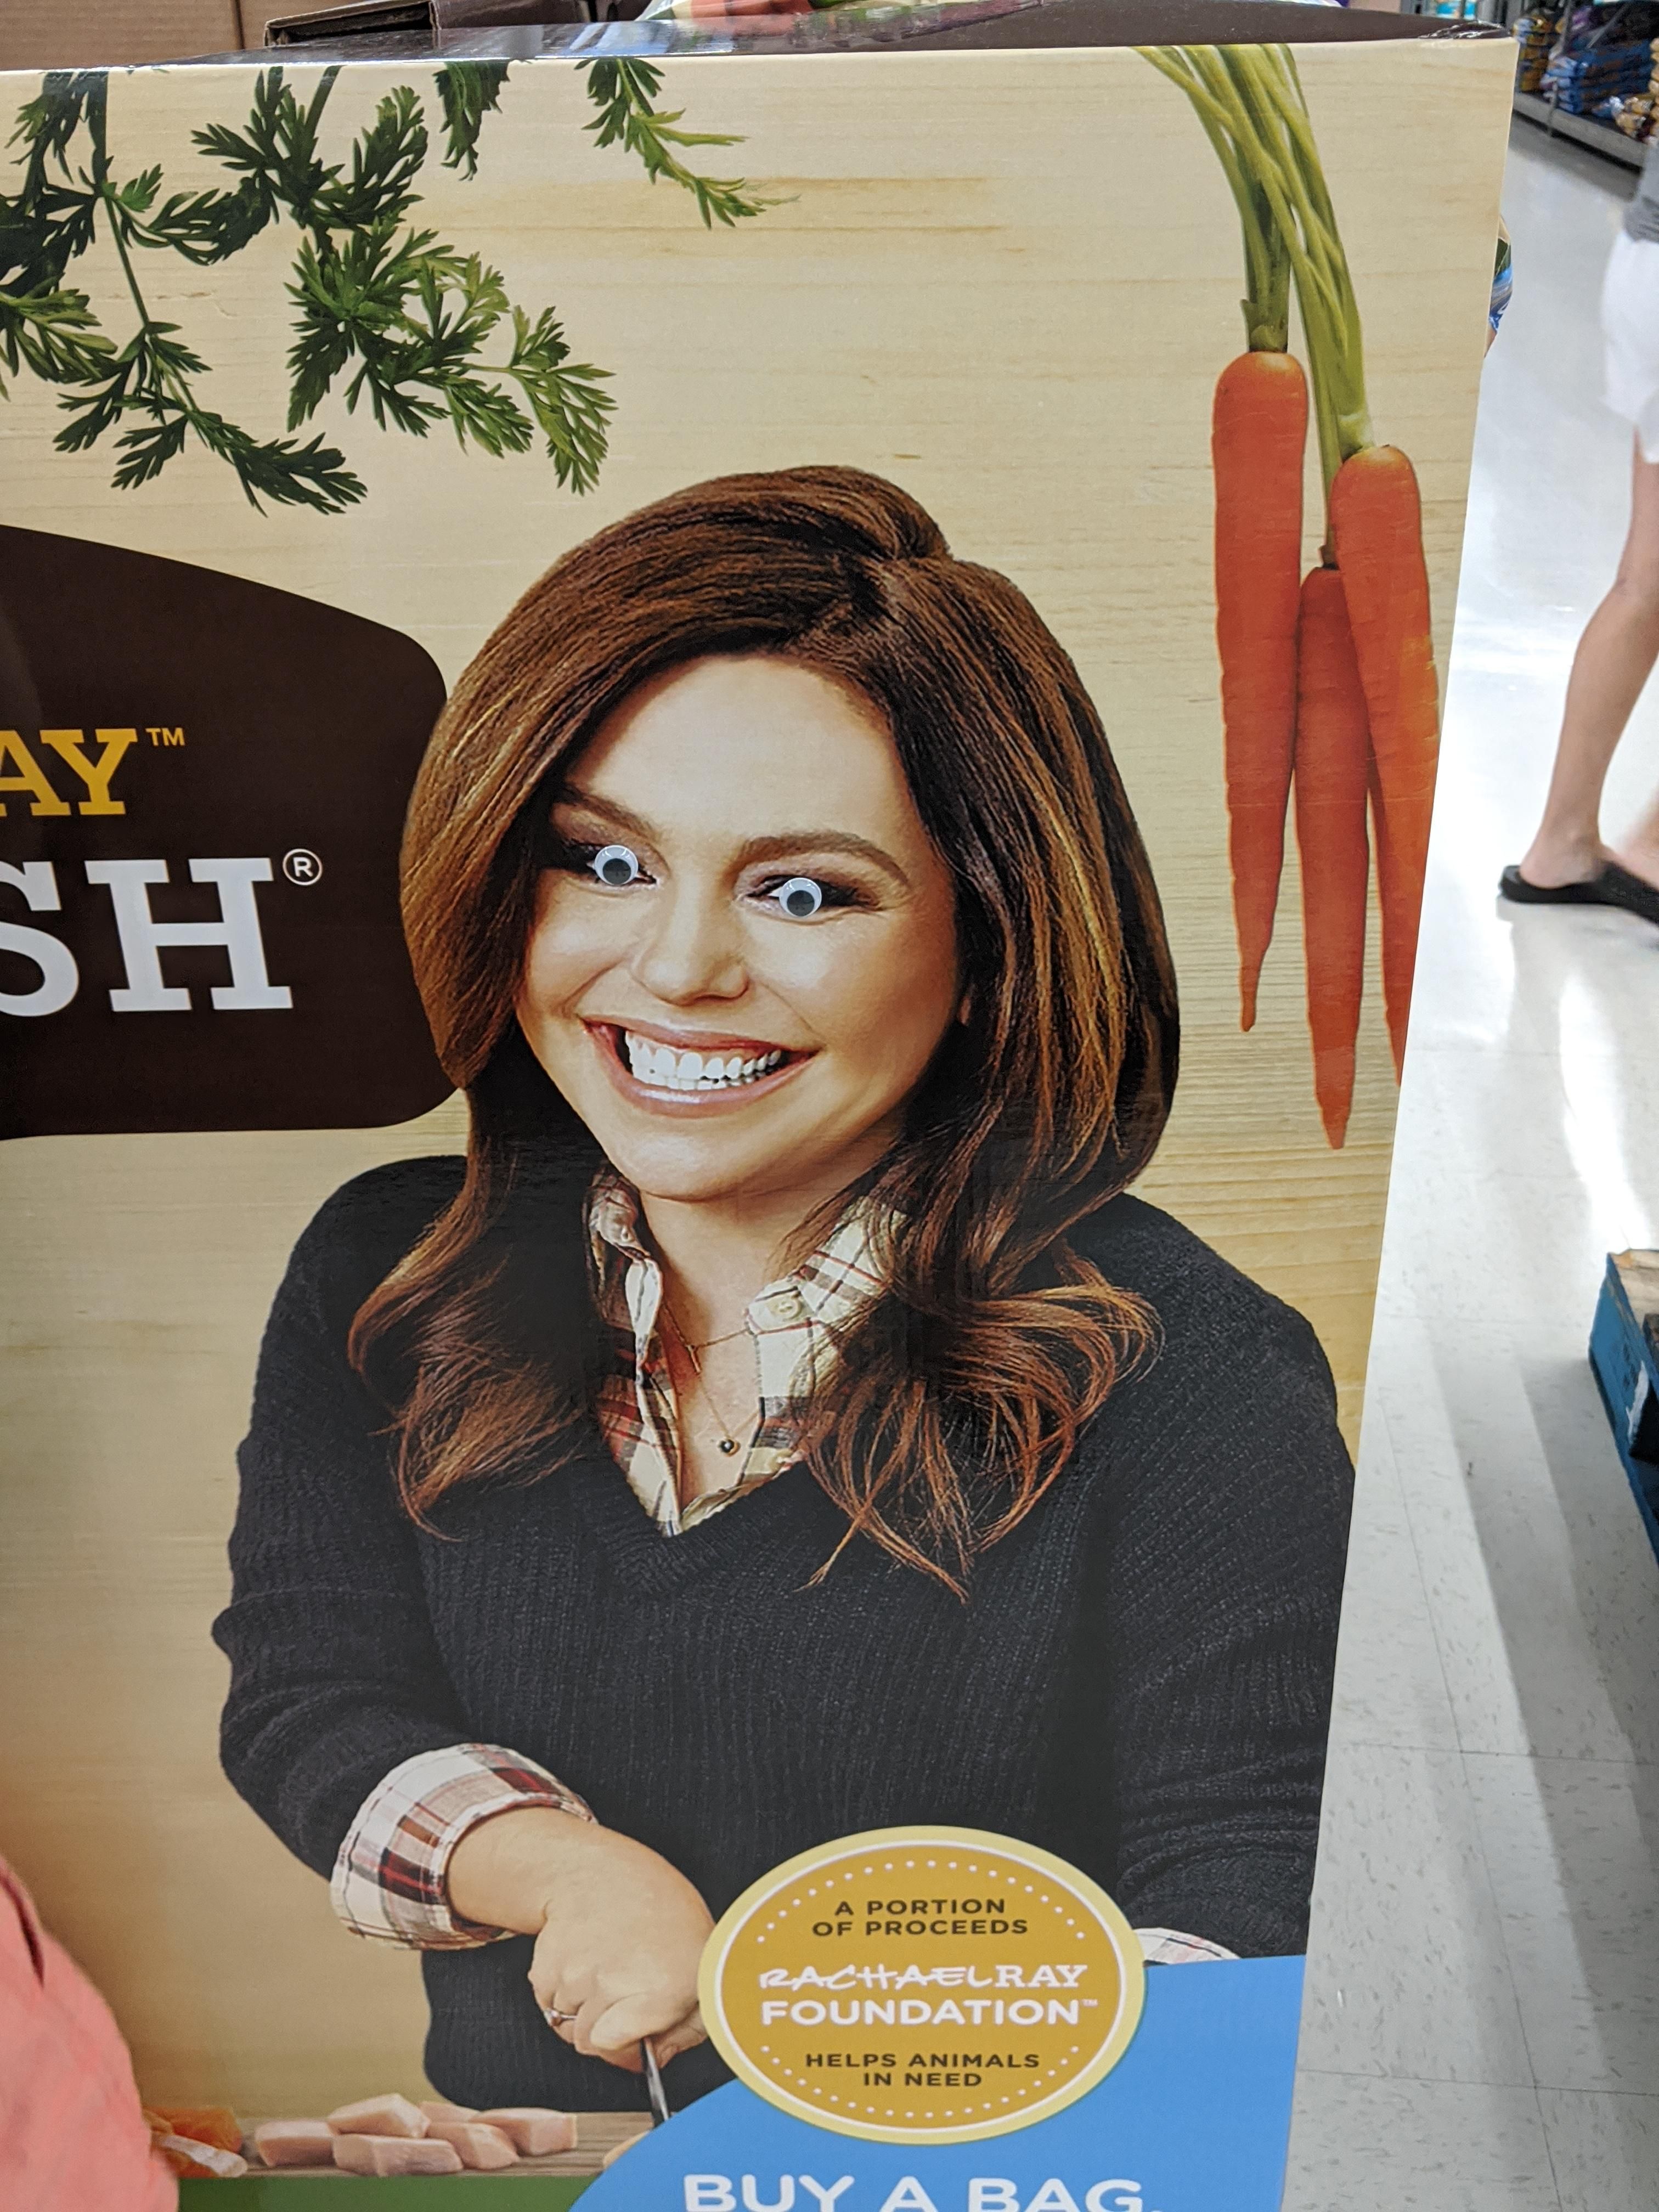 Some genius put googly eyes on this Rachel Ray display in Walmart.